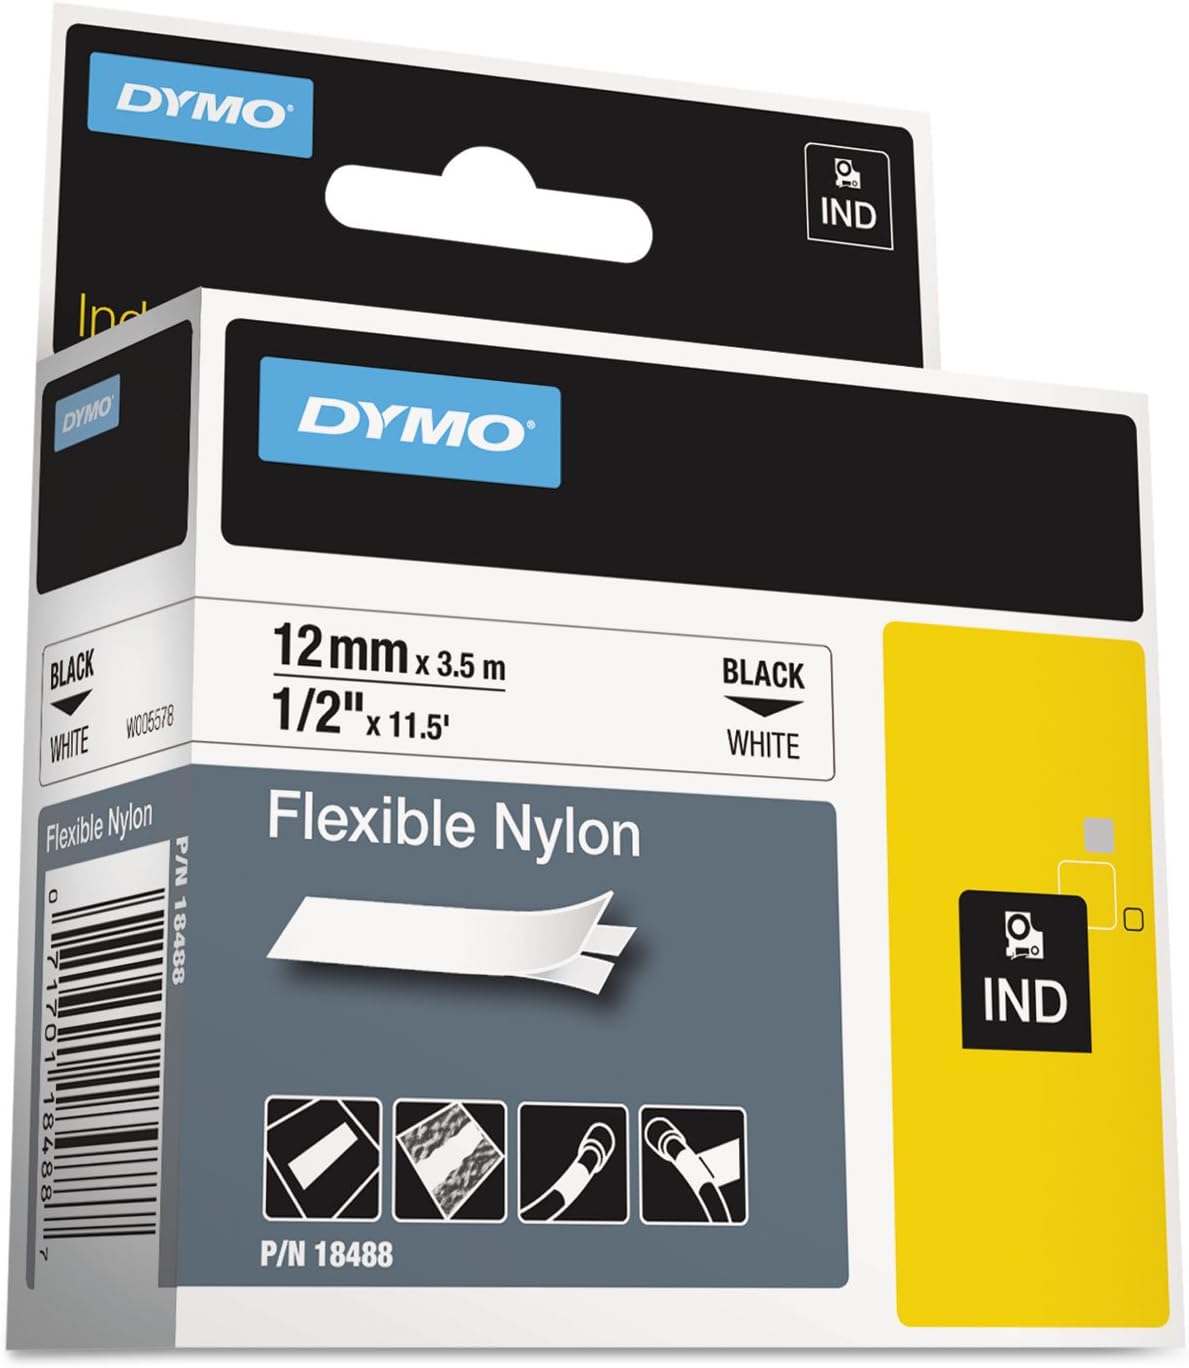 DYMO 18488 Rhino Flexible Nylon Industrial Label Tape, 1/2-Inch x 11 1/2 ft, White/Black Print